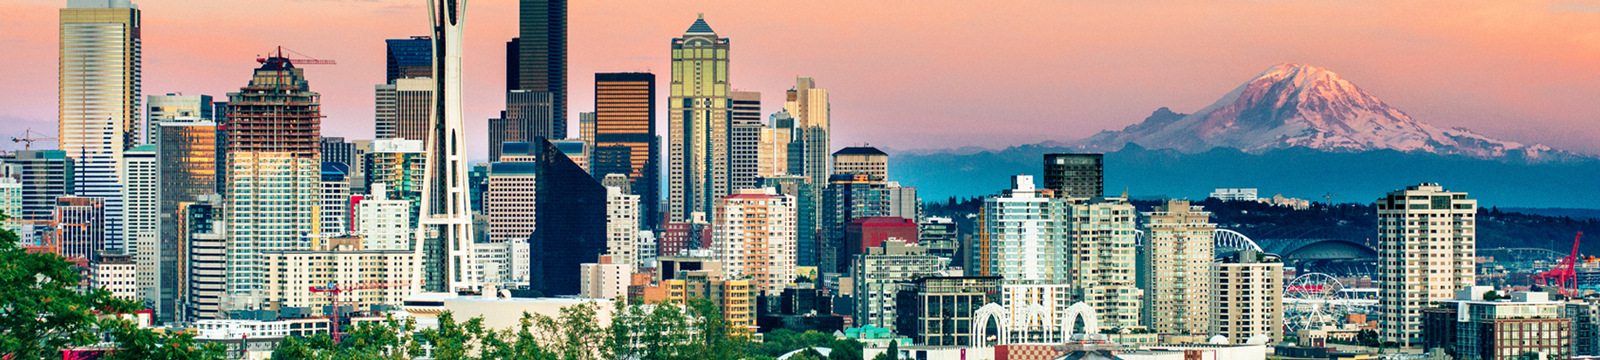 Panorama of downtown Seattle, Washington